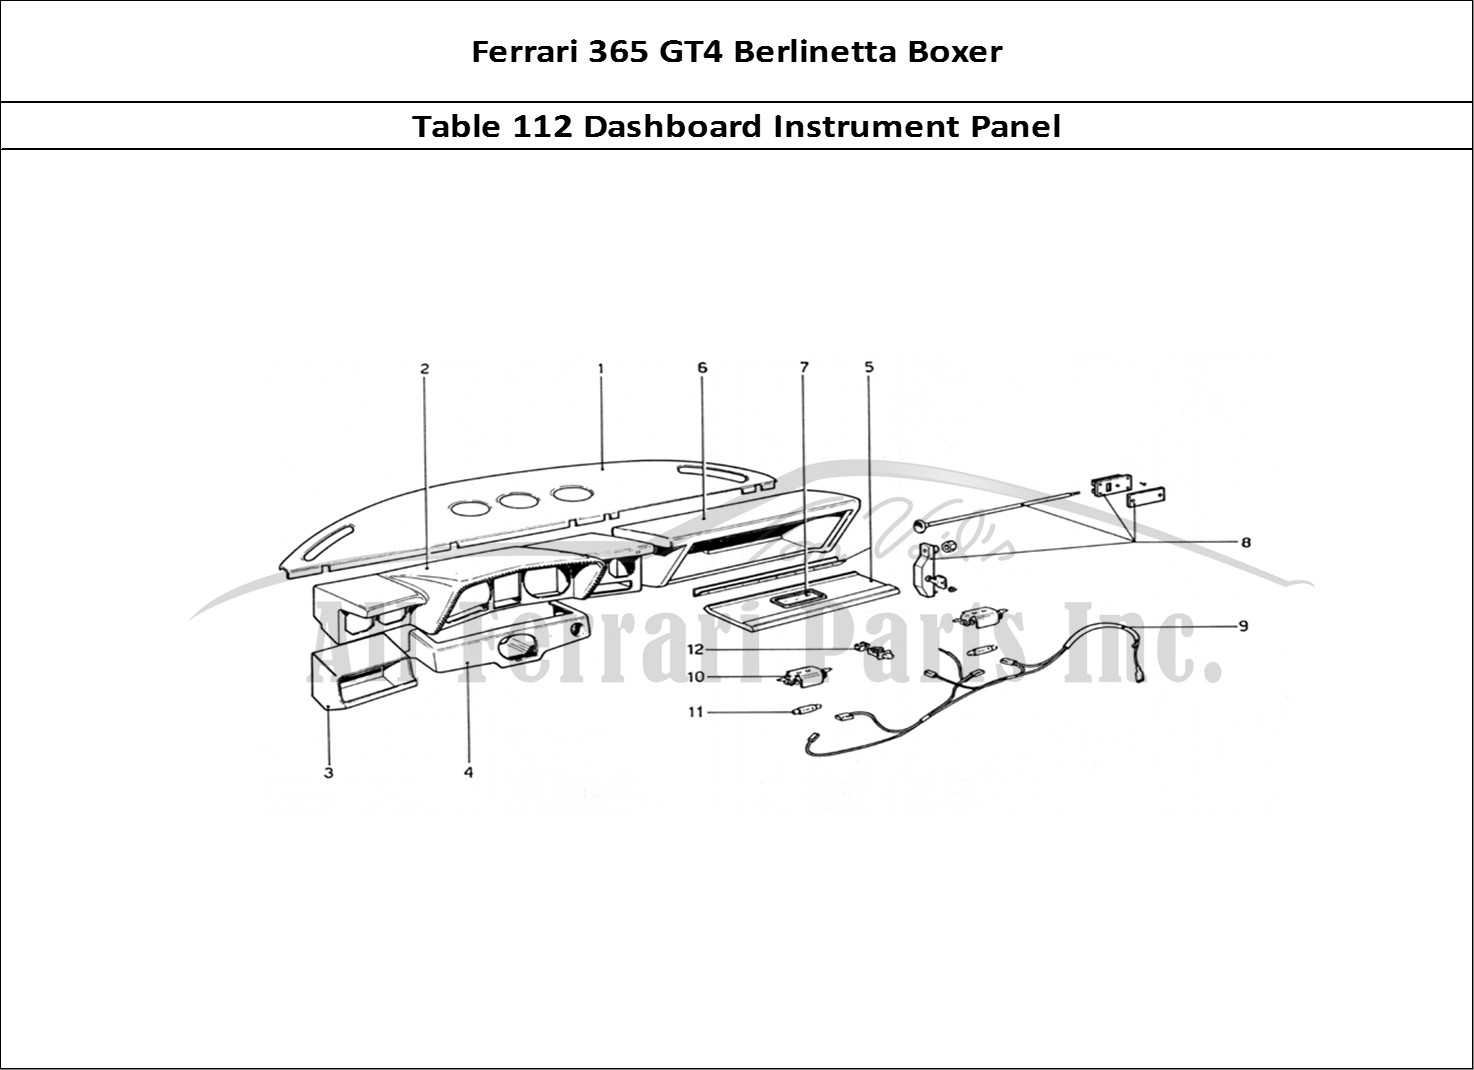 Ferrari Parts Ferrari 365 GT4 Berlinetta Boxer Page 112 Instrument Panel